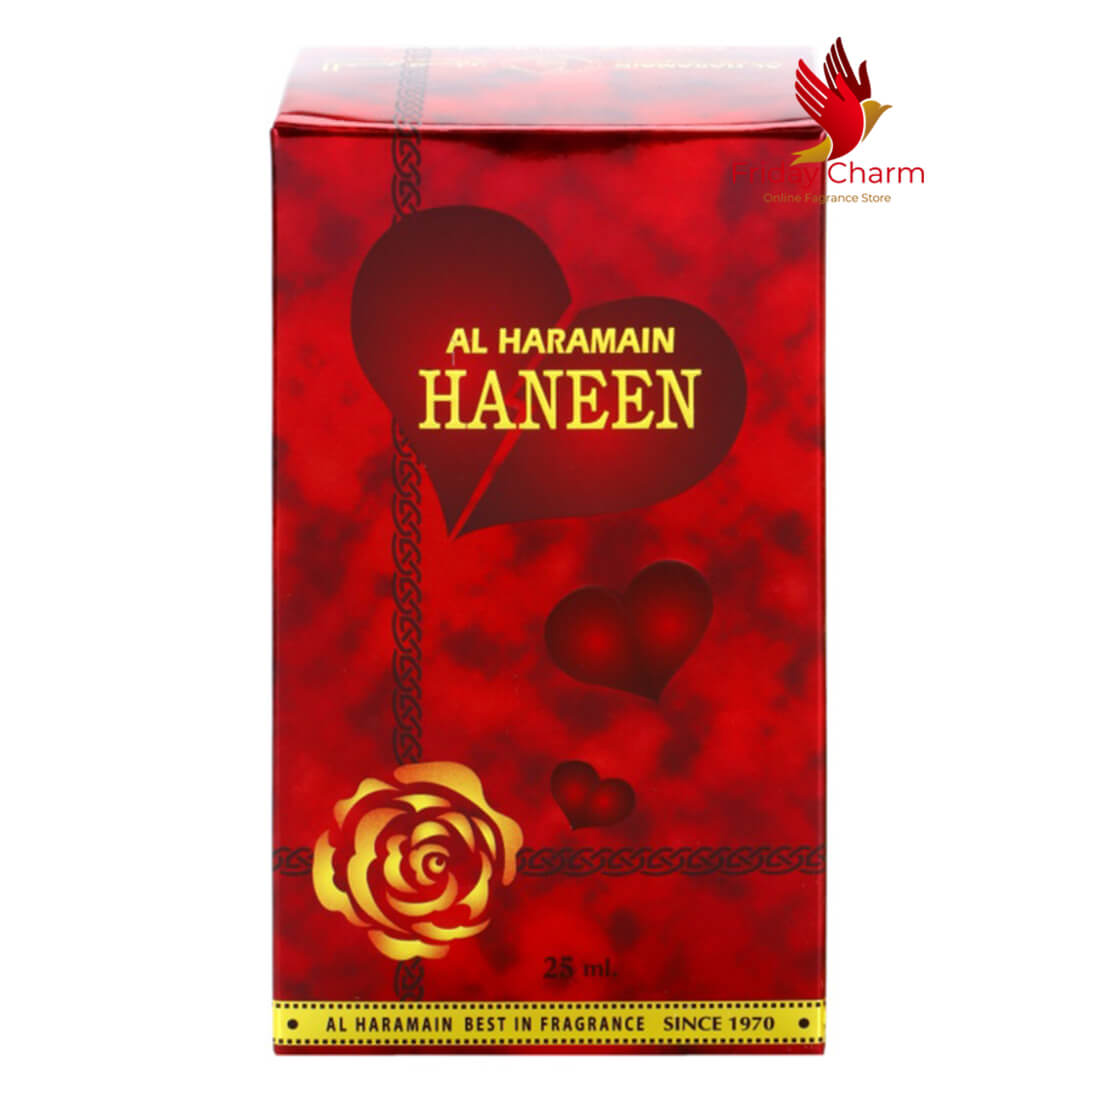 Al Haramain Haneen Attar - 25 ml